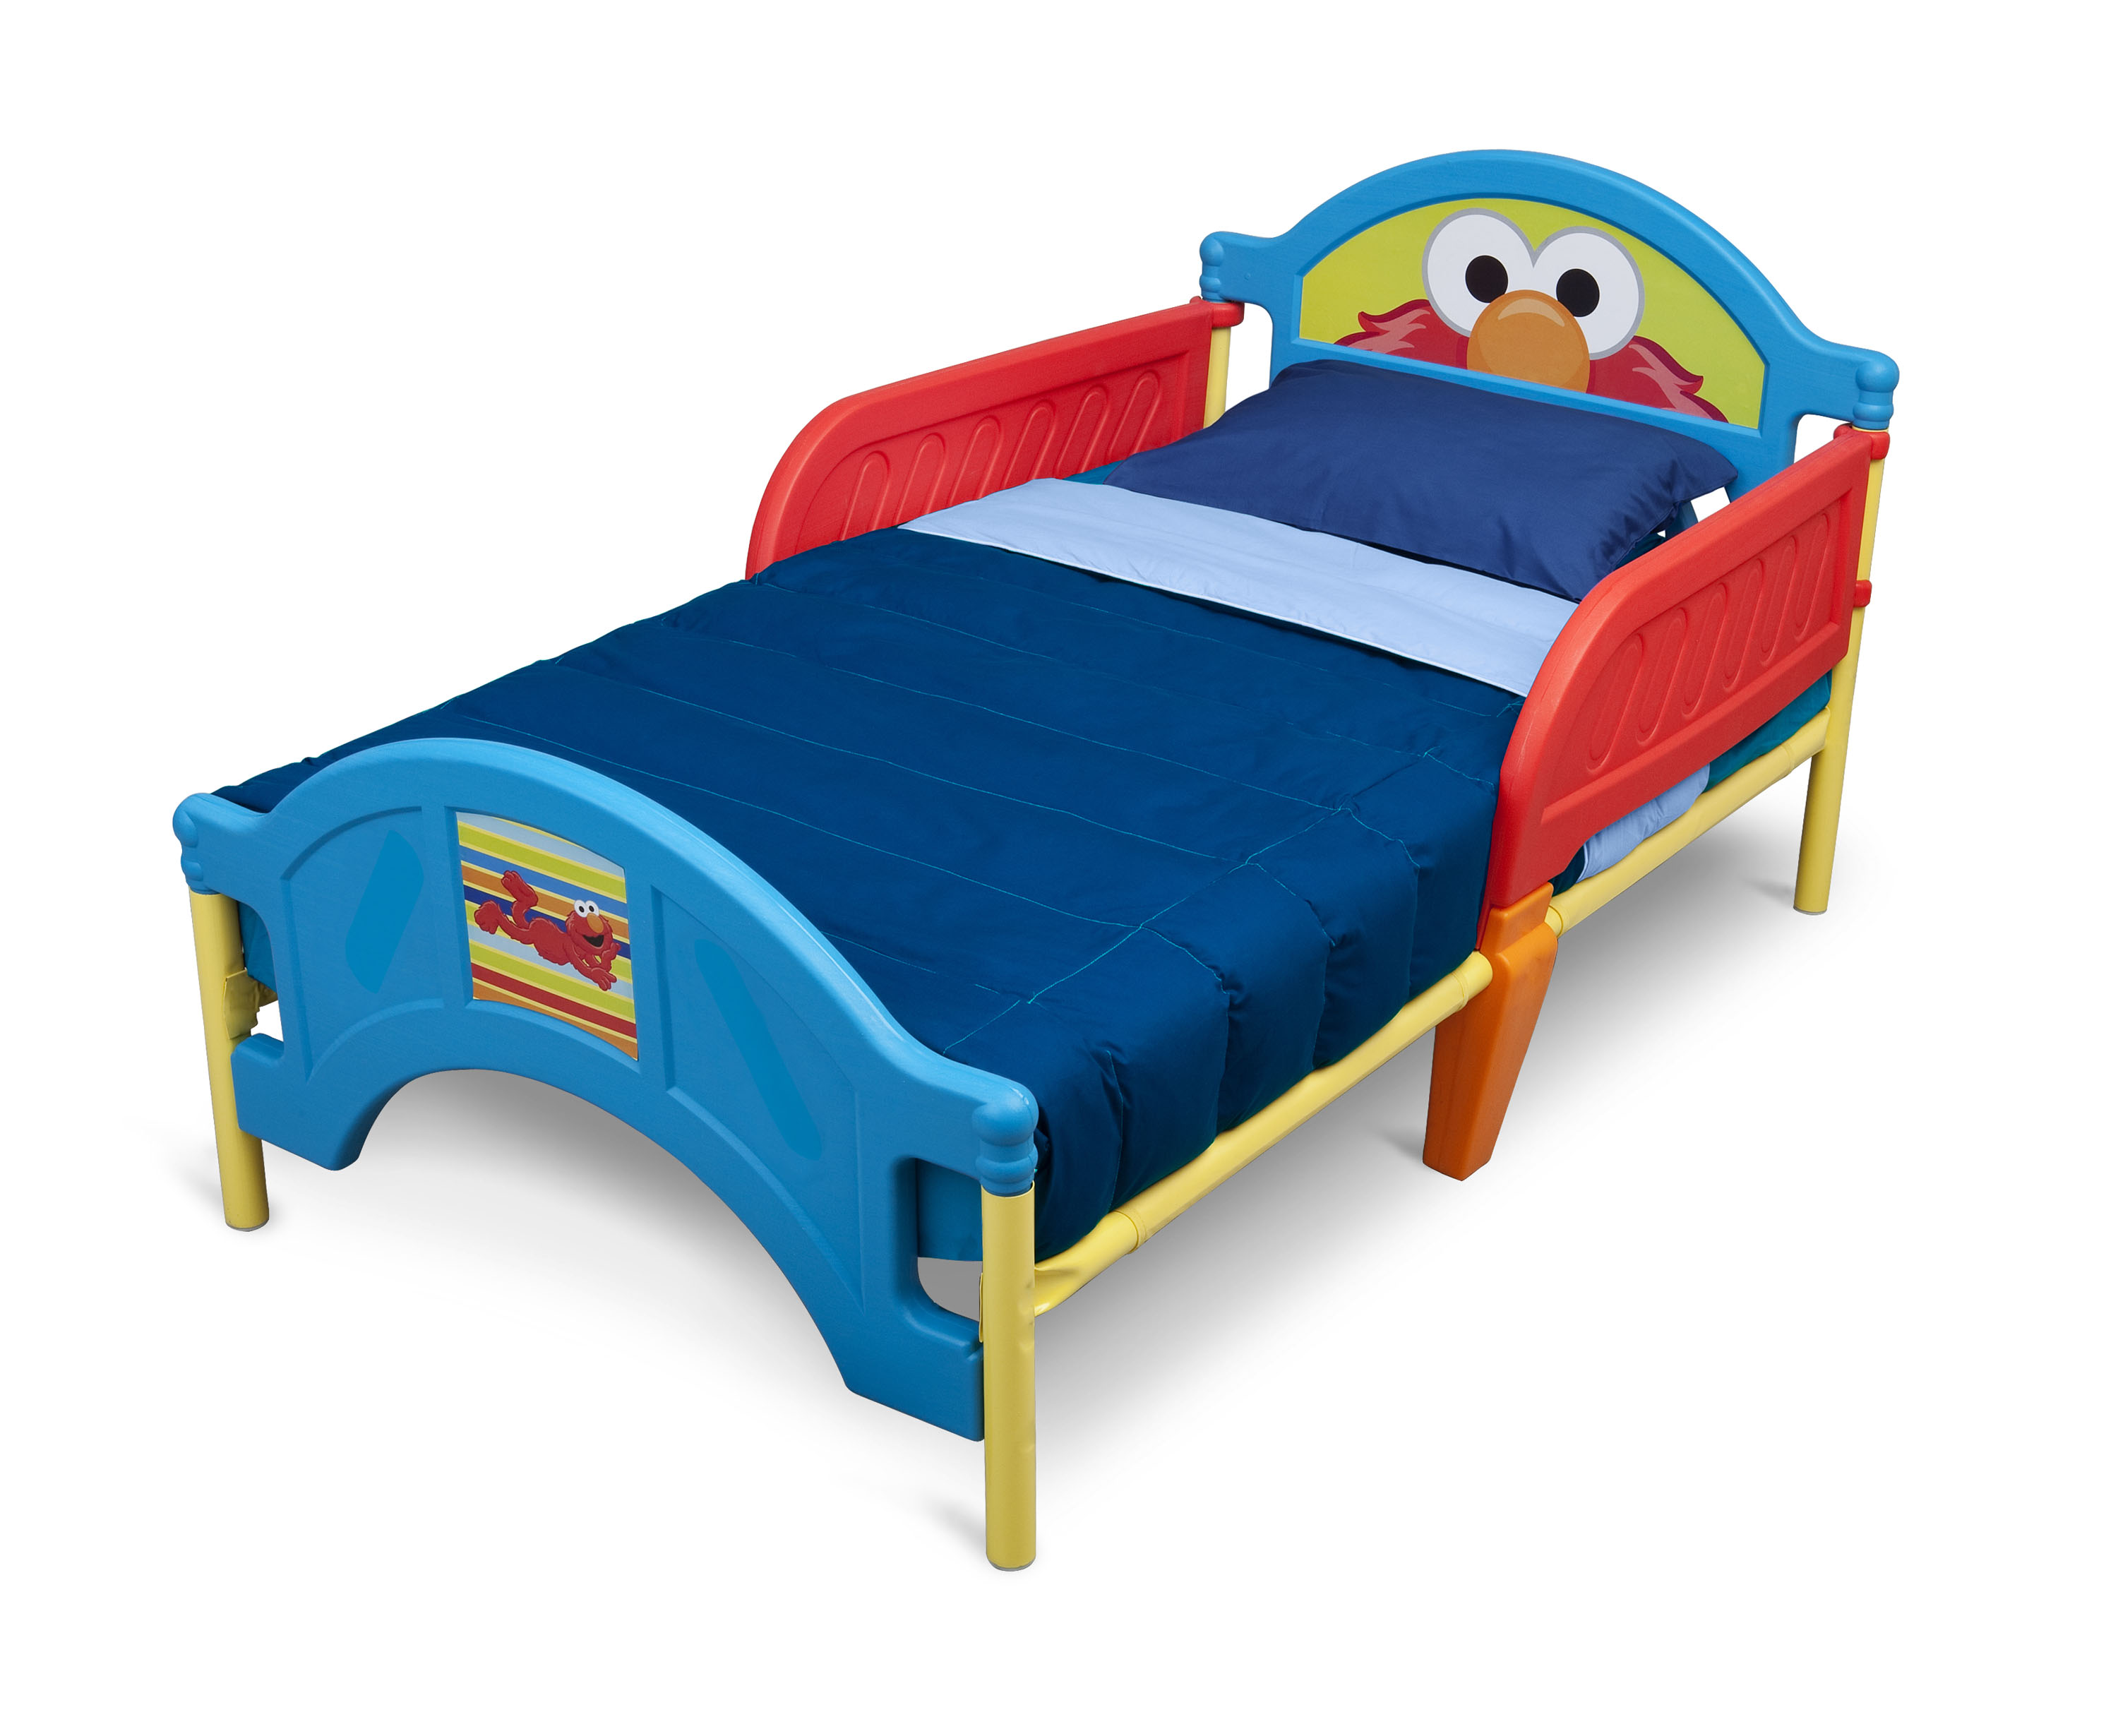 Delta Children Sesame Street Elmo Plastic Toddler Bed, Red and Blue - image 4 of 5